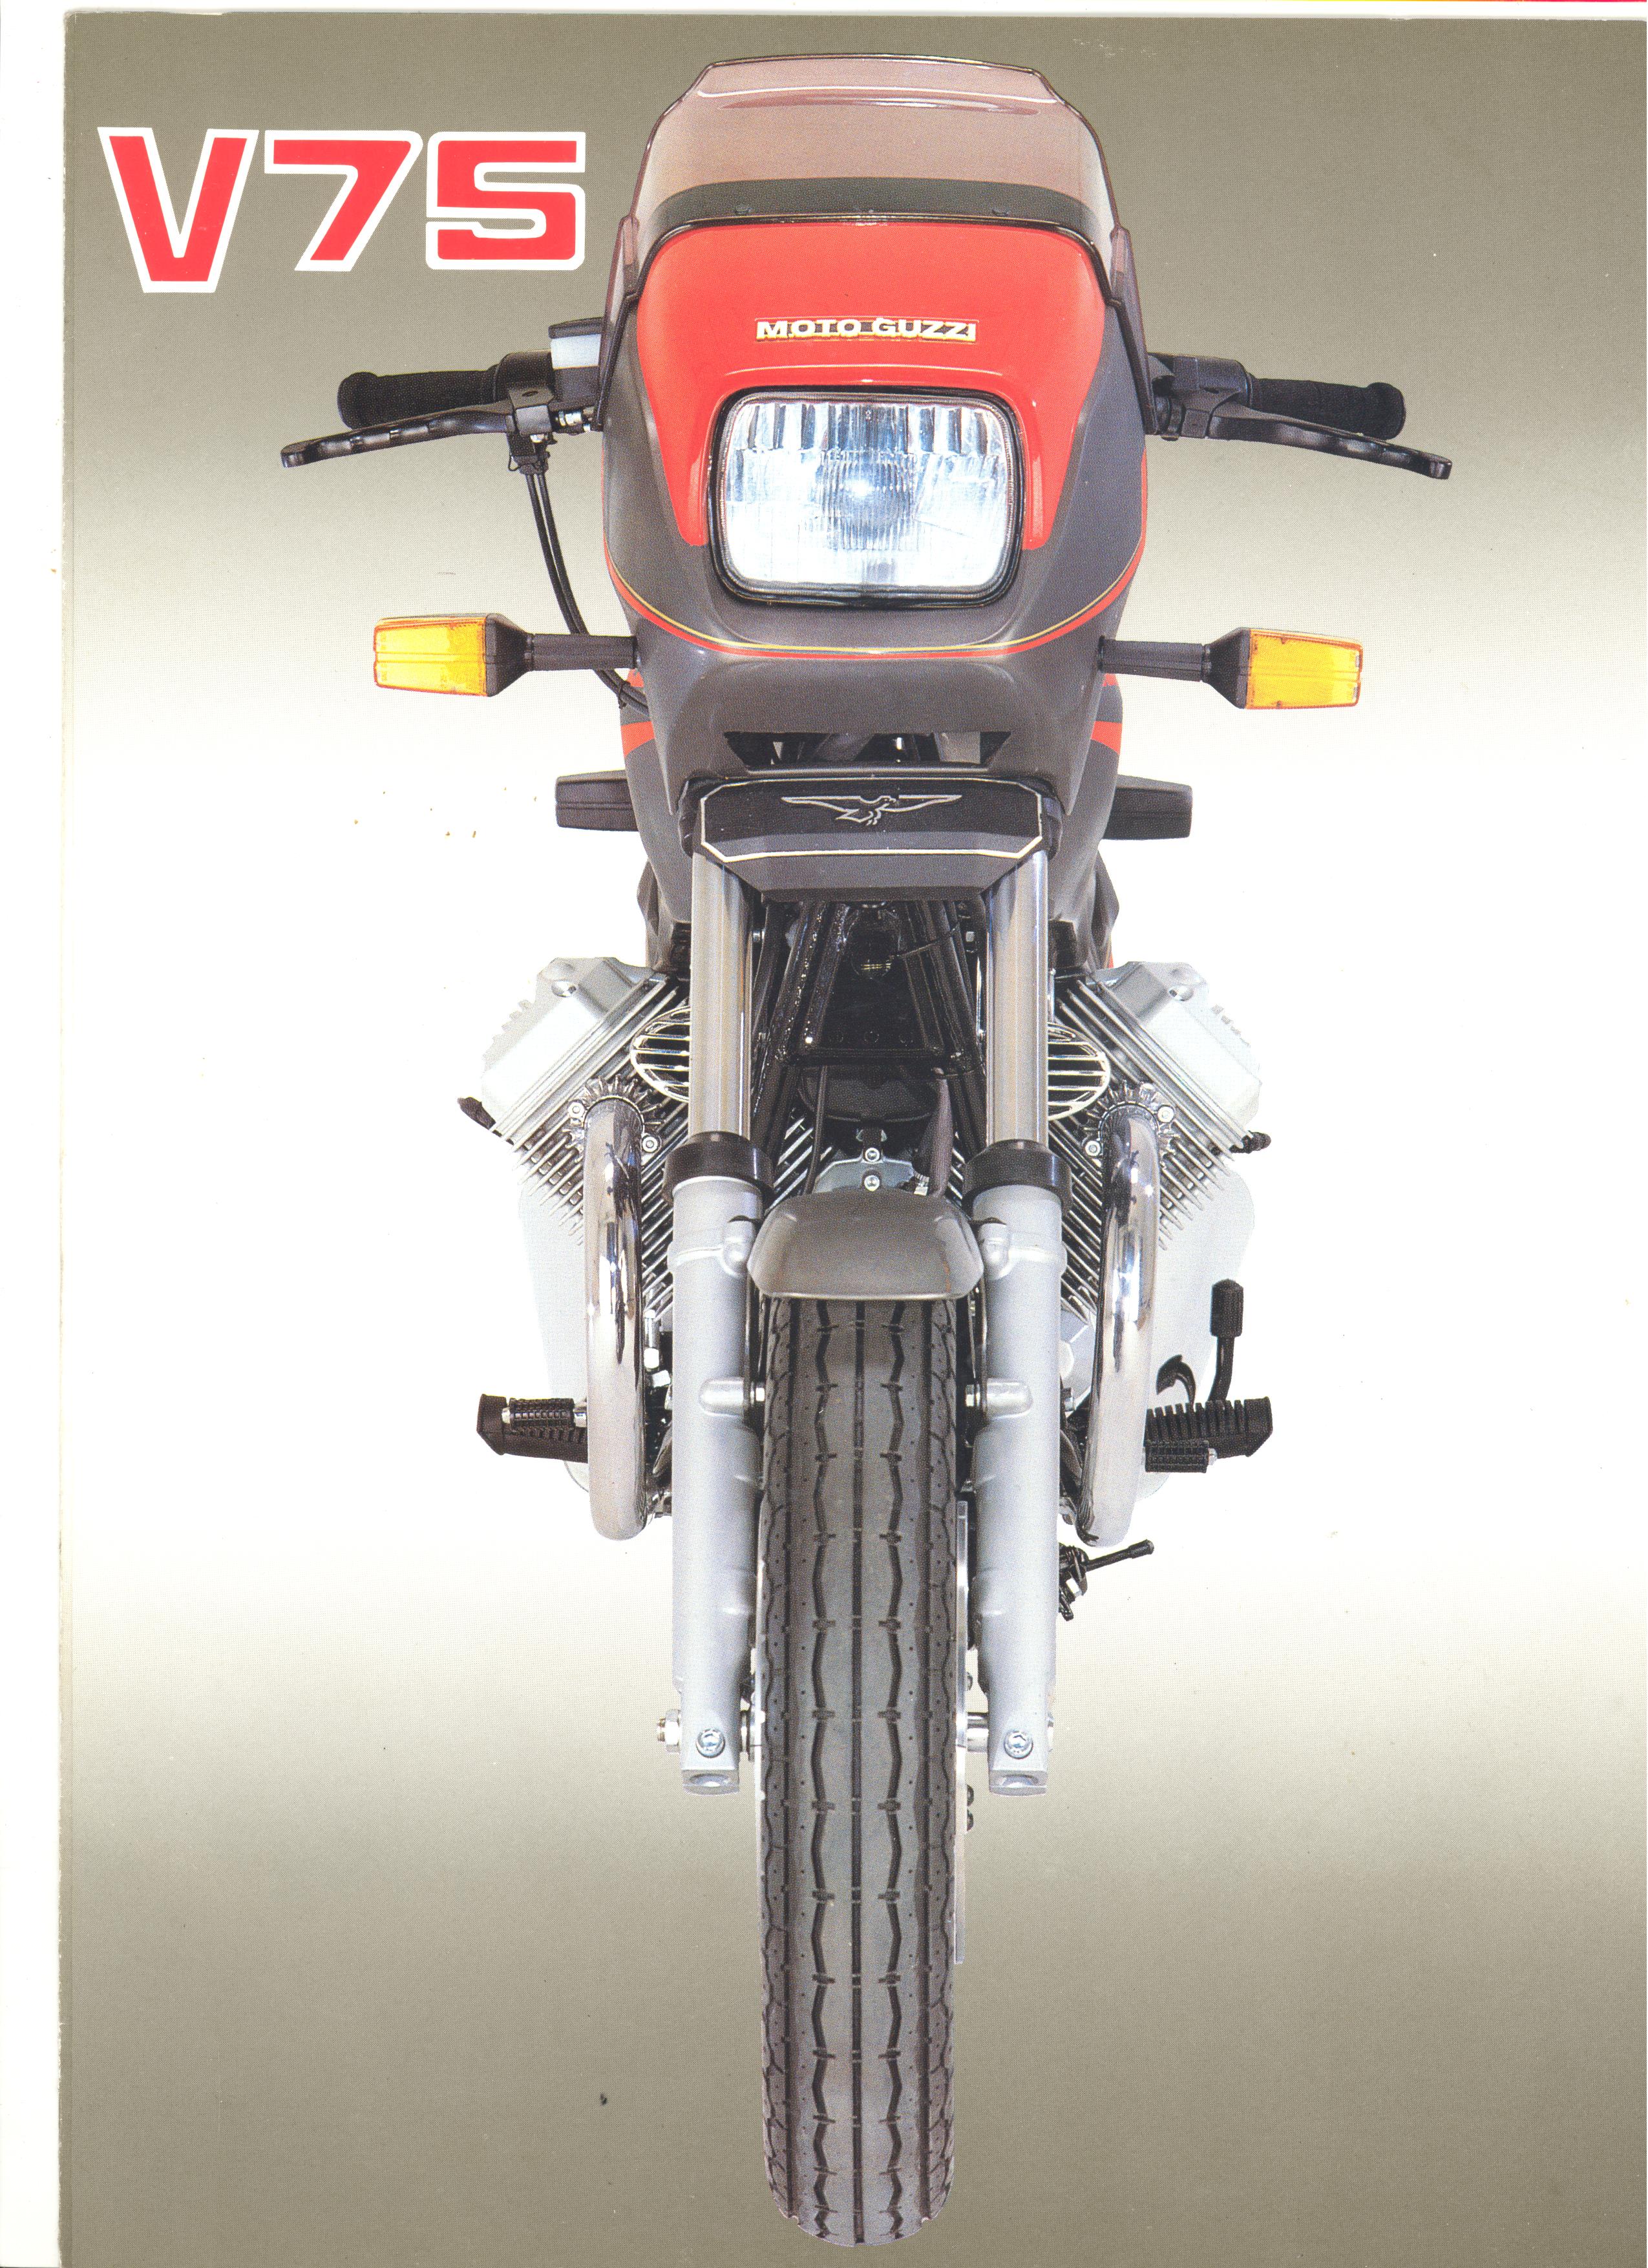 Moto Guzzi factory brochure: V75